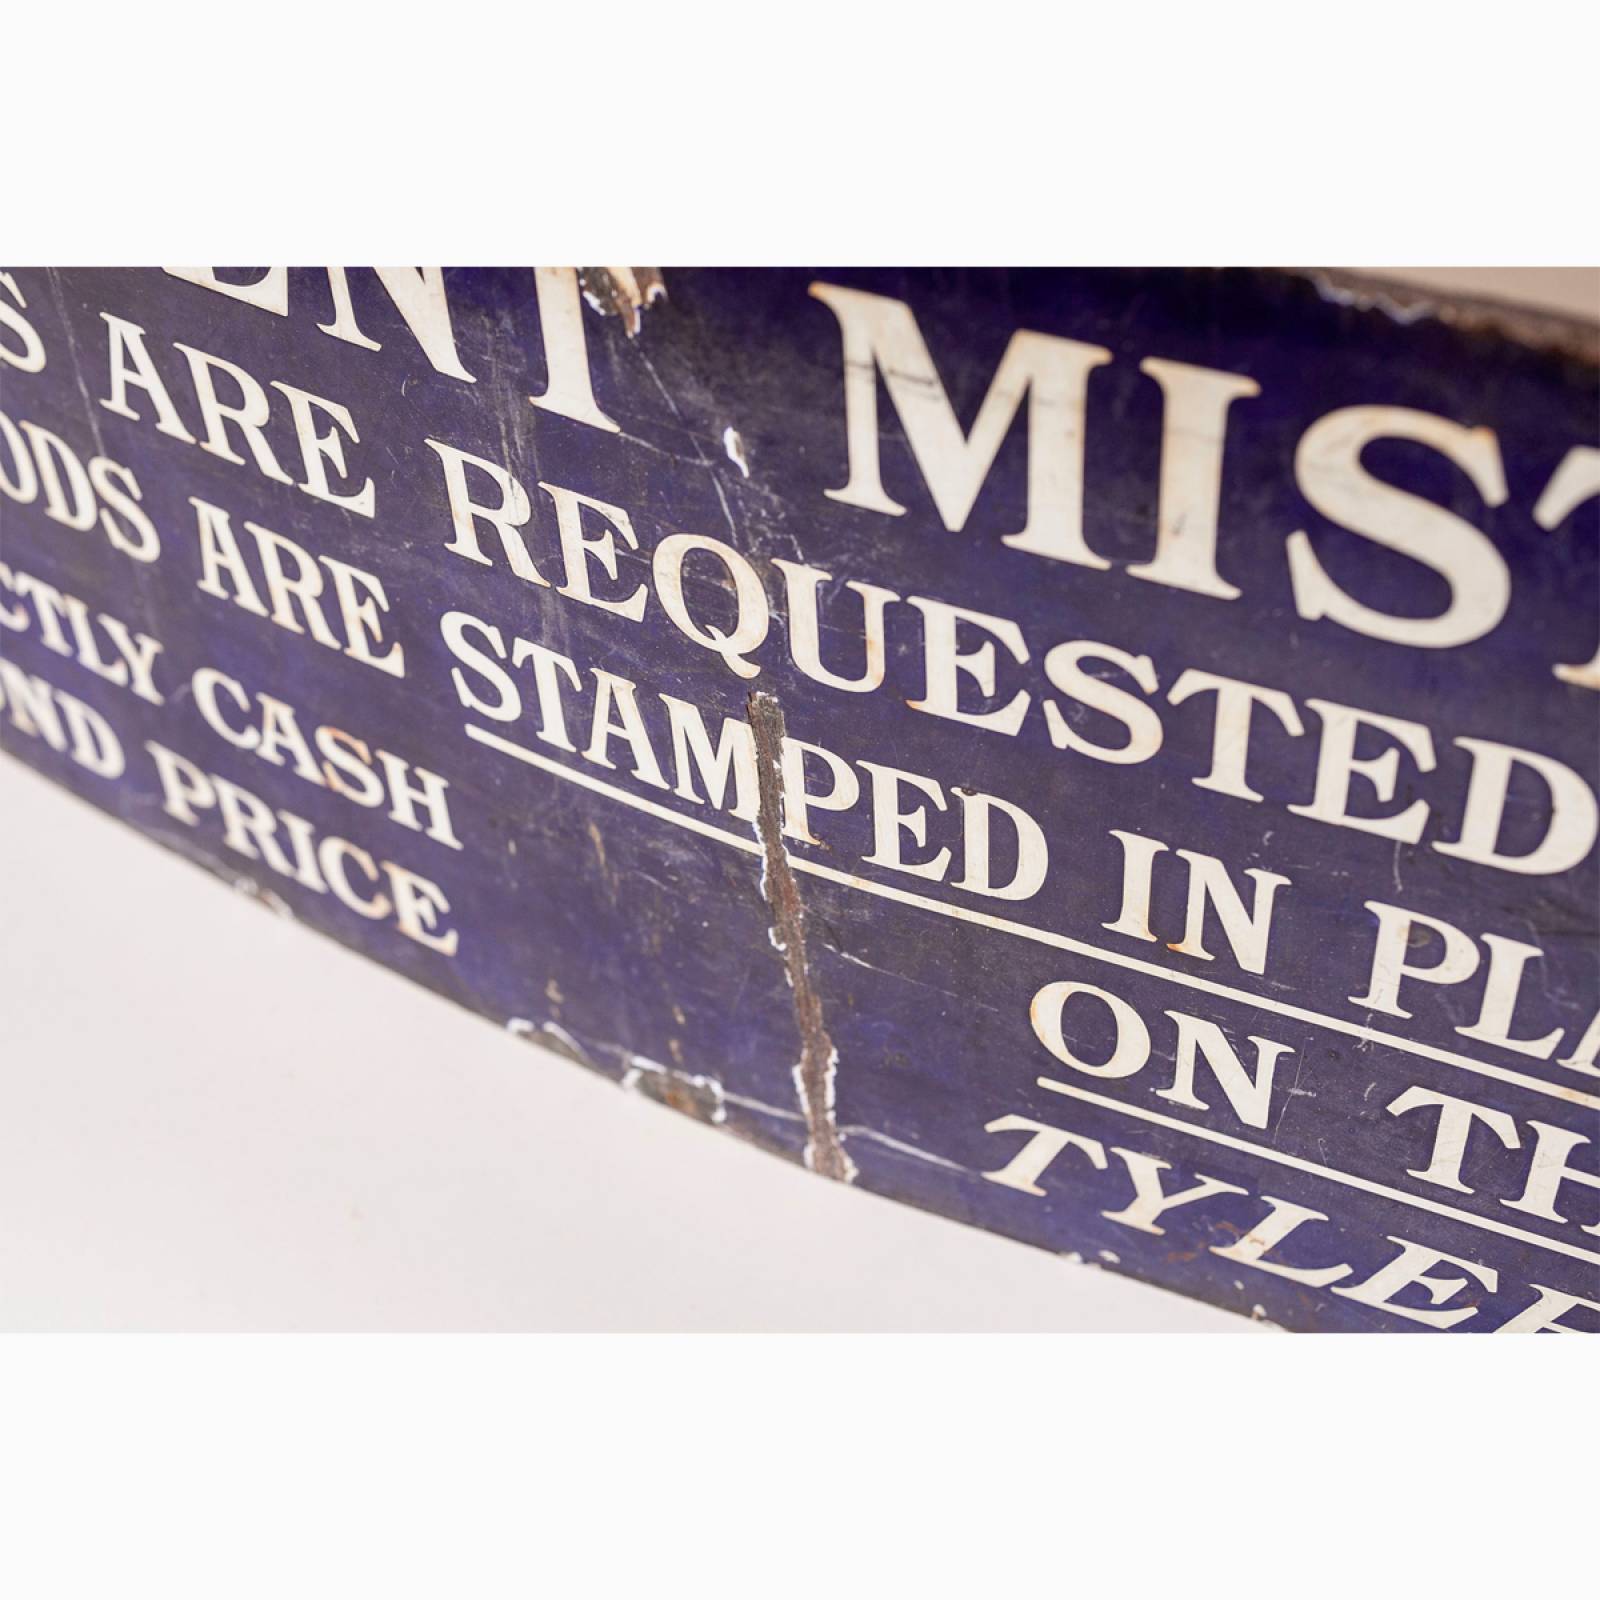 Vintage Shop Sign - To Prevent Mistakes thumbnails